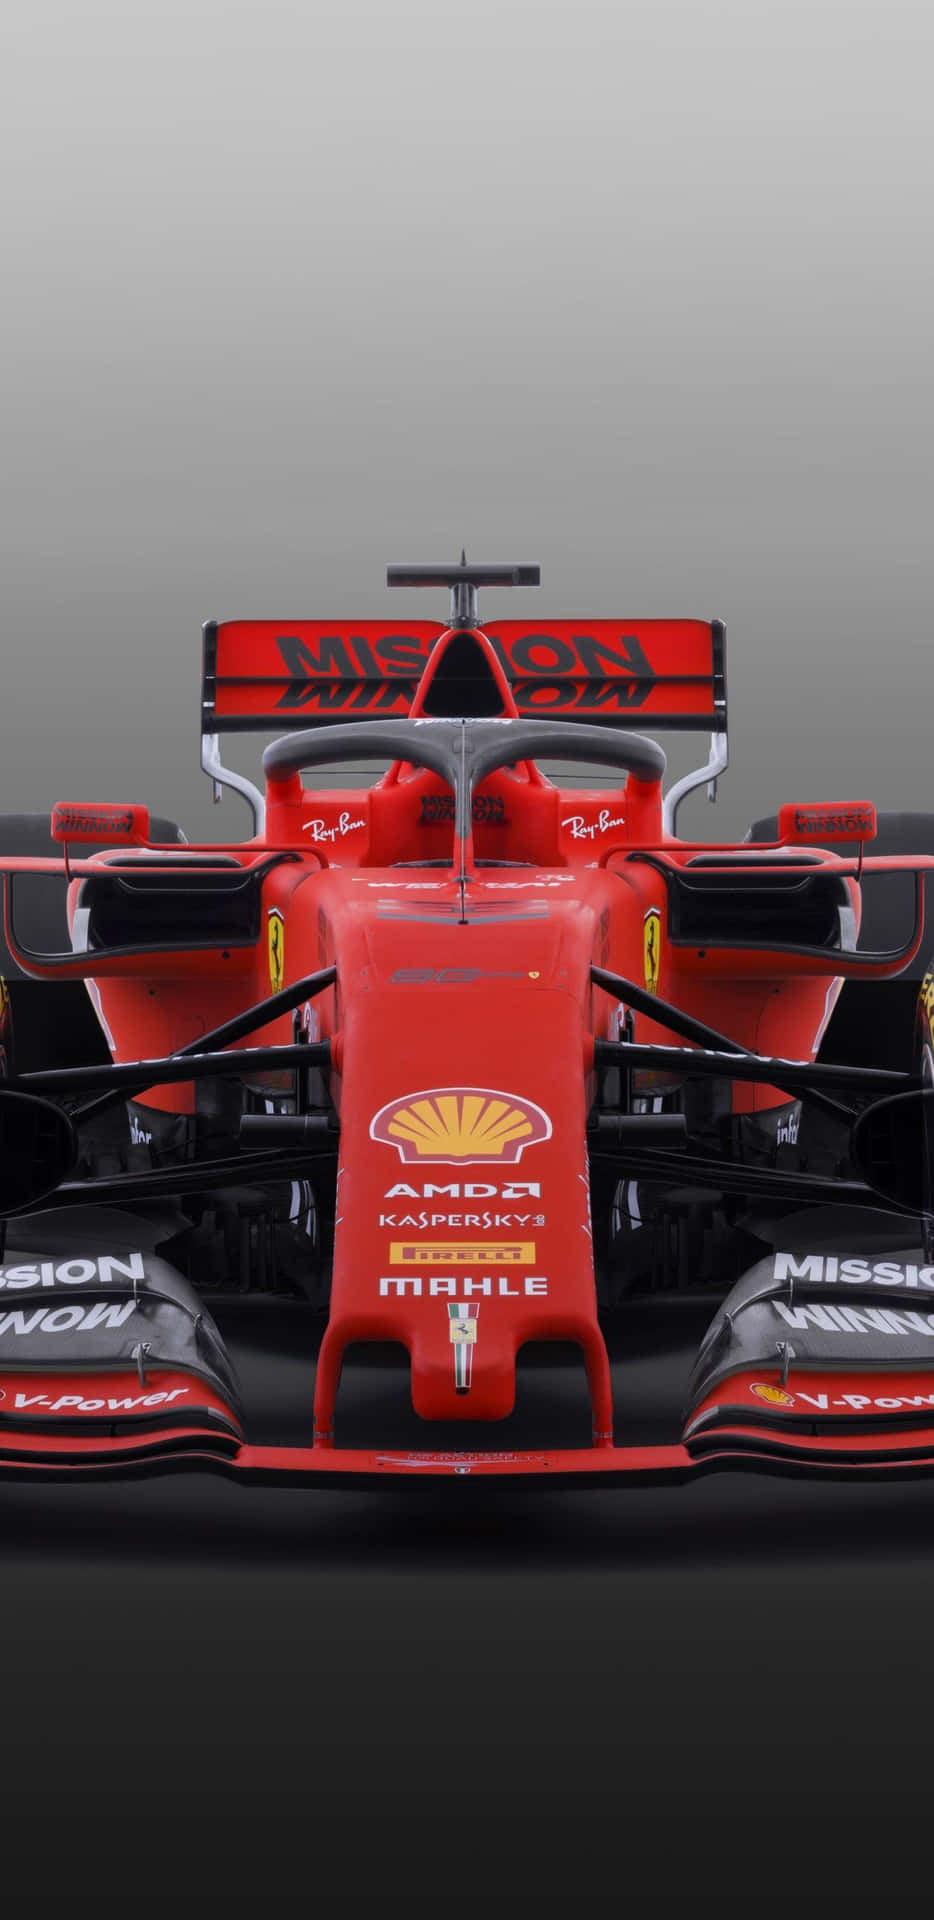 Scuderia Ferrari kører rundt på banen i en F1-bil. Wallpaper